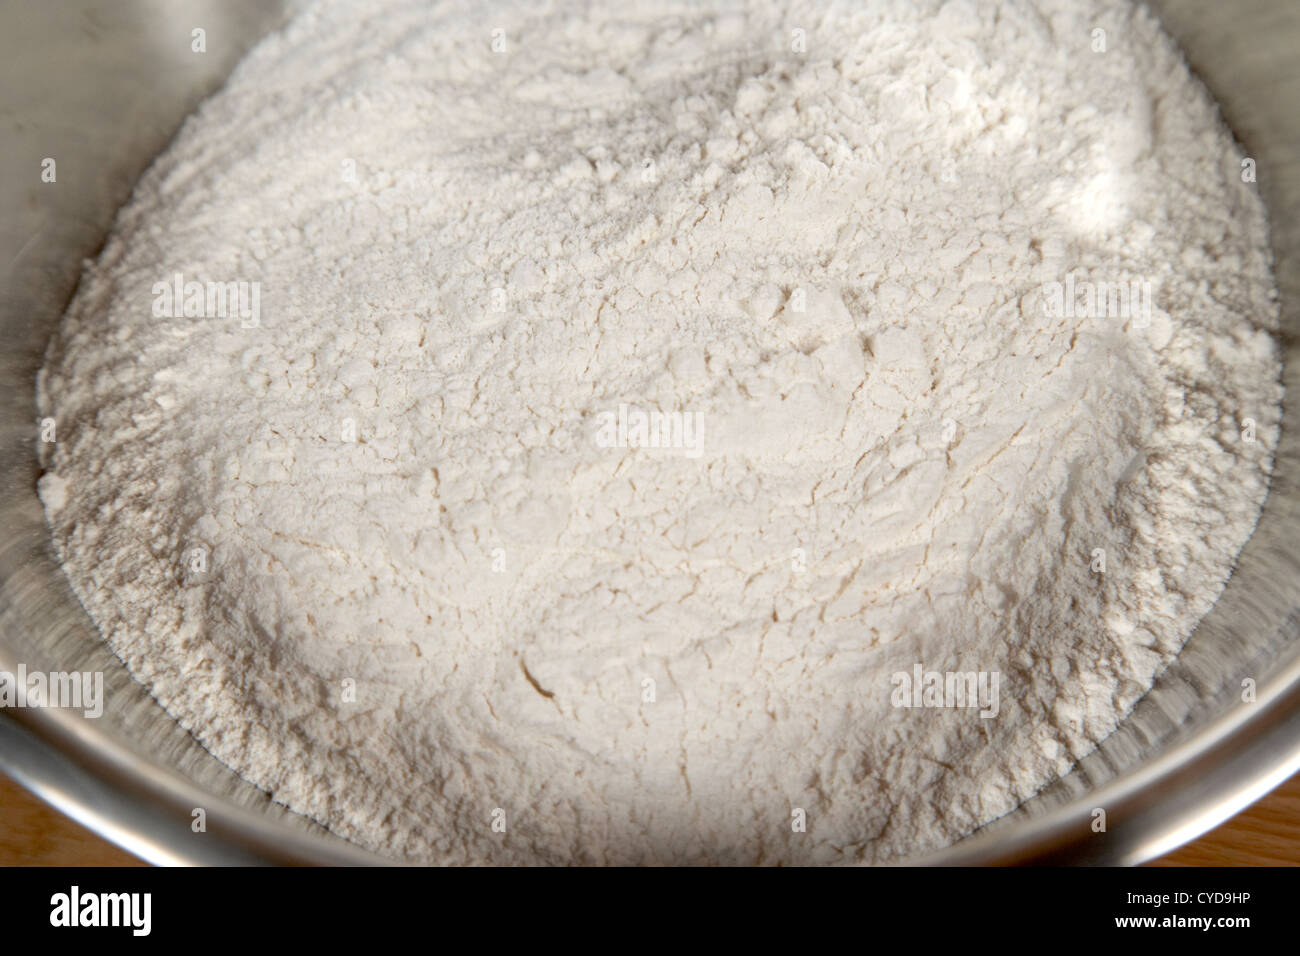 plain flour in a metal bowl for baking Stock Photo